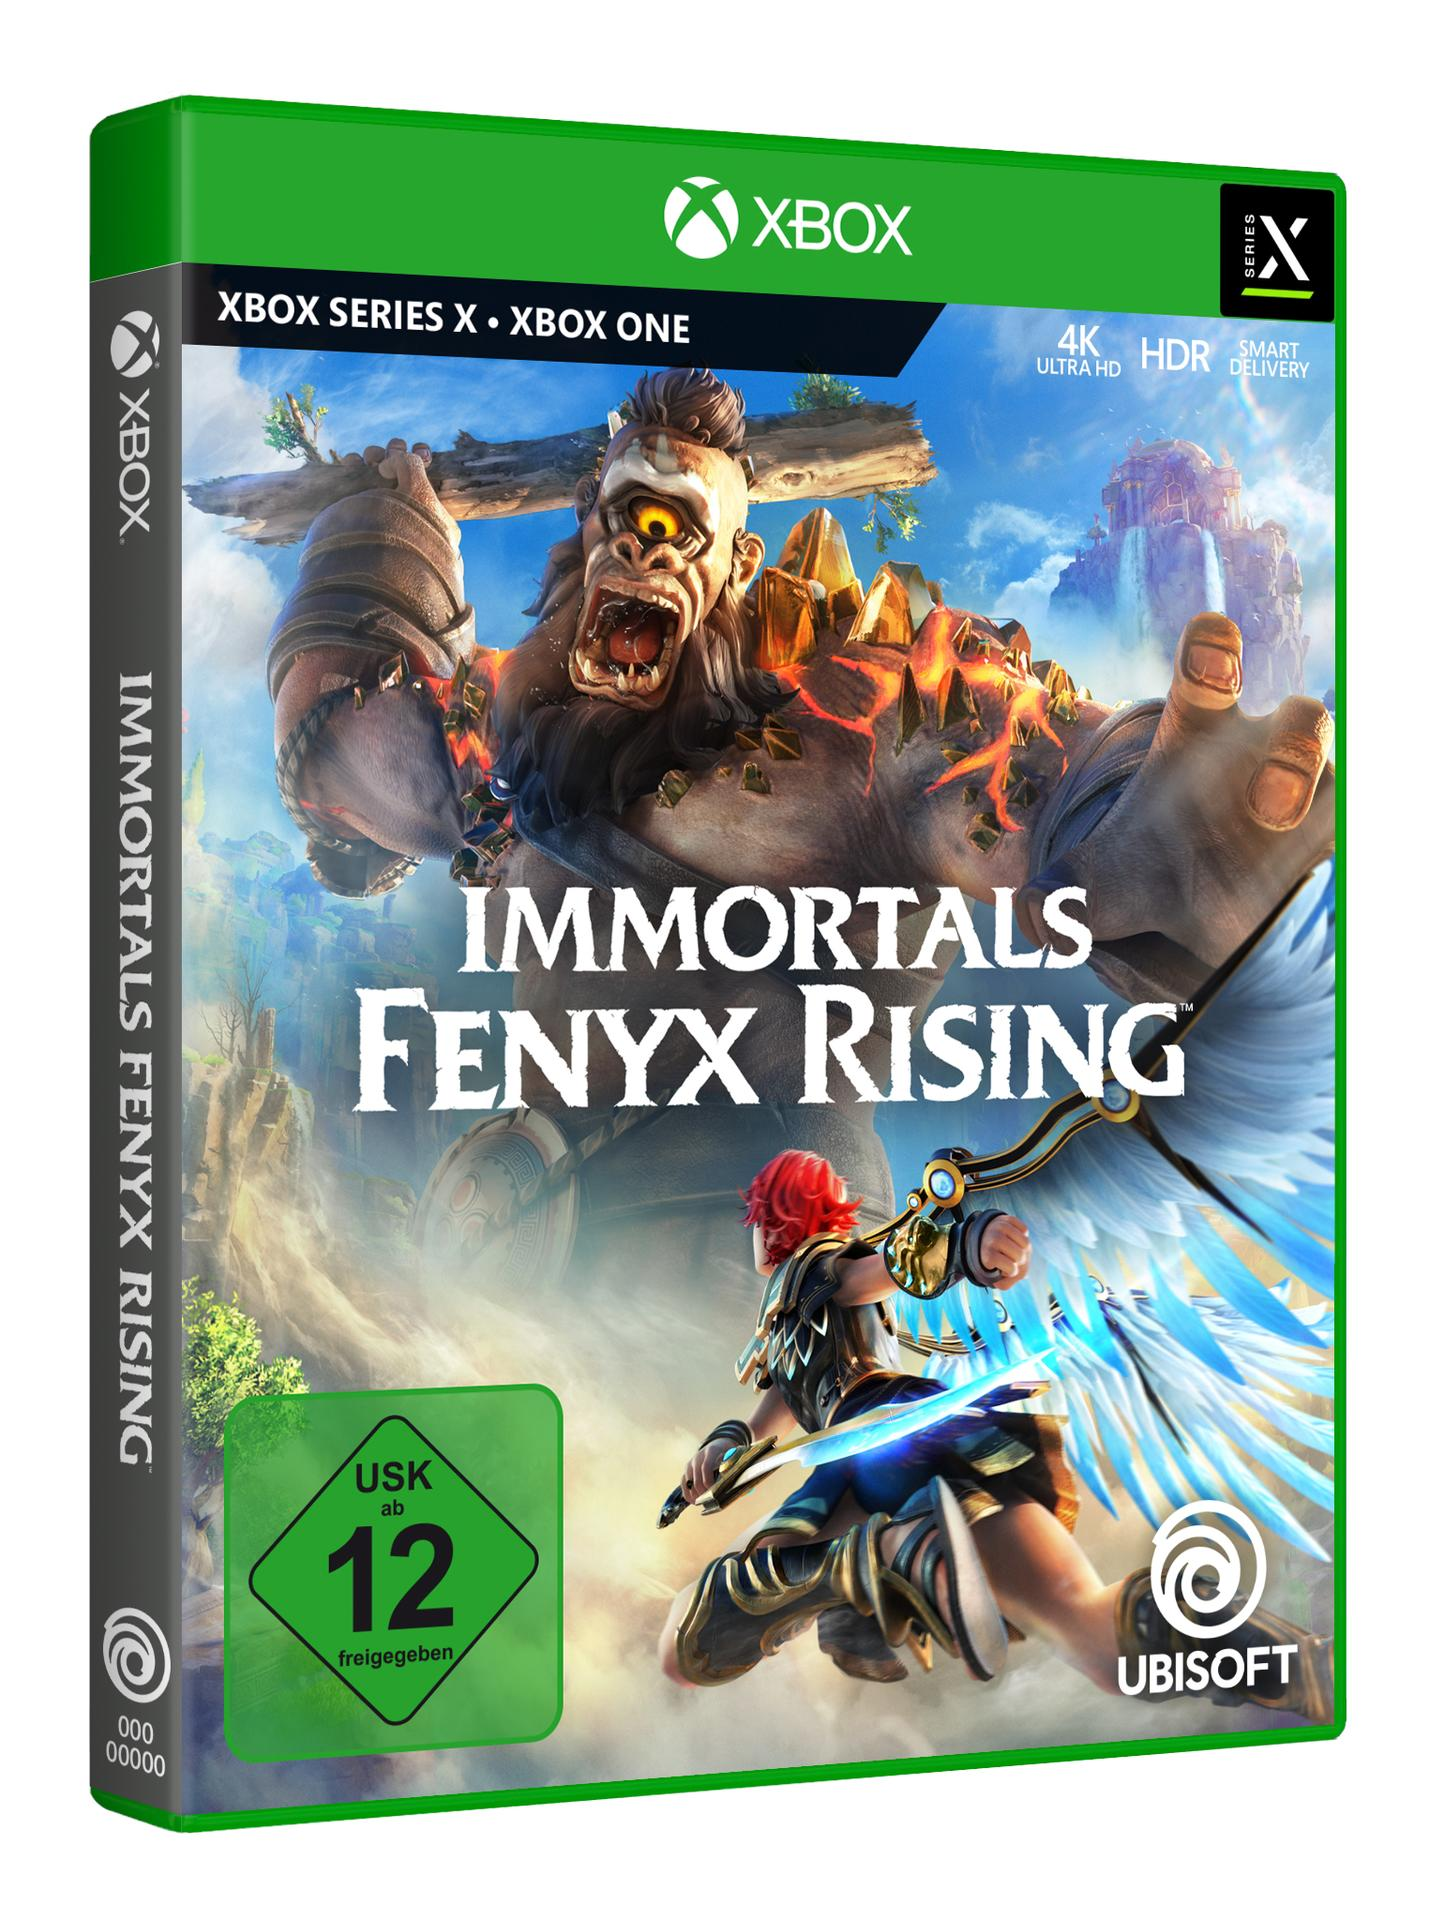 Immortals Fenyx Rising - Series & One X] [Xbox Xbox